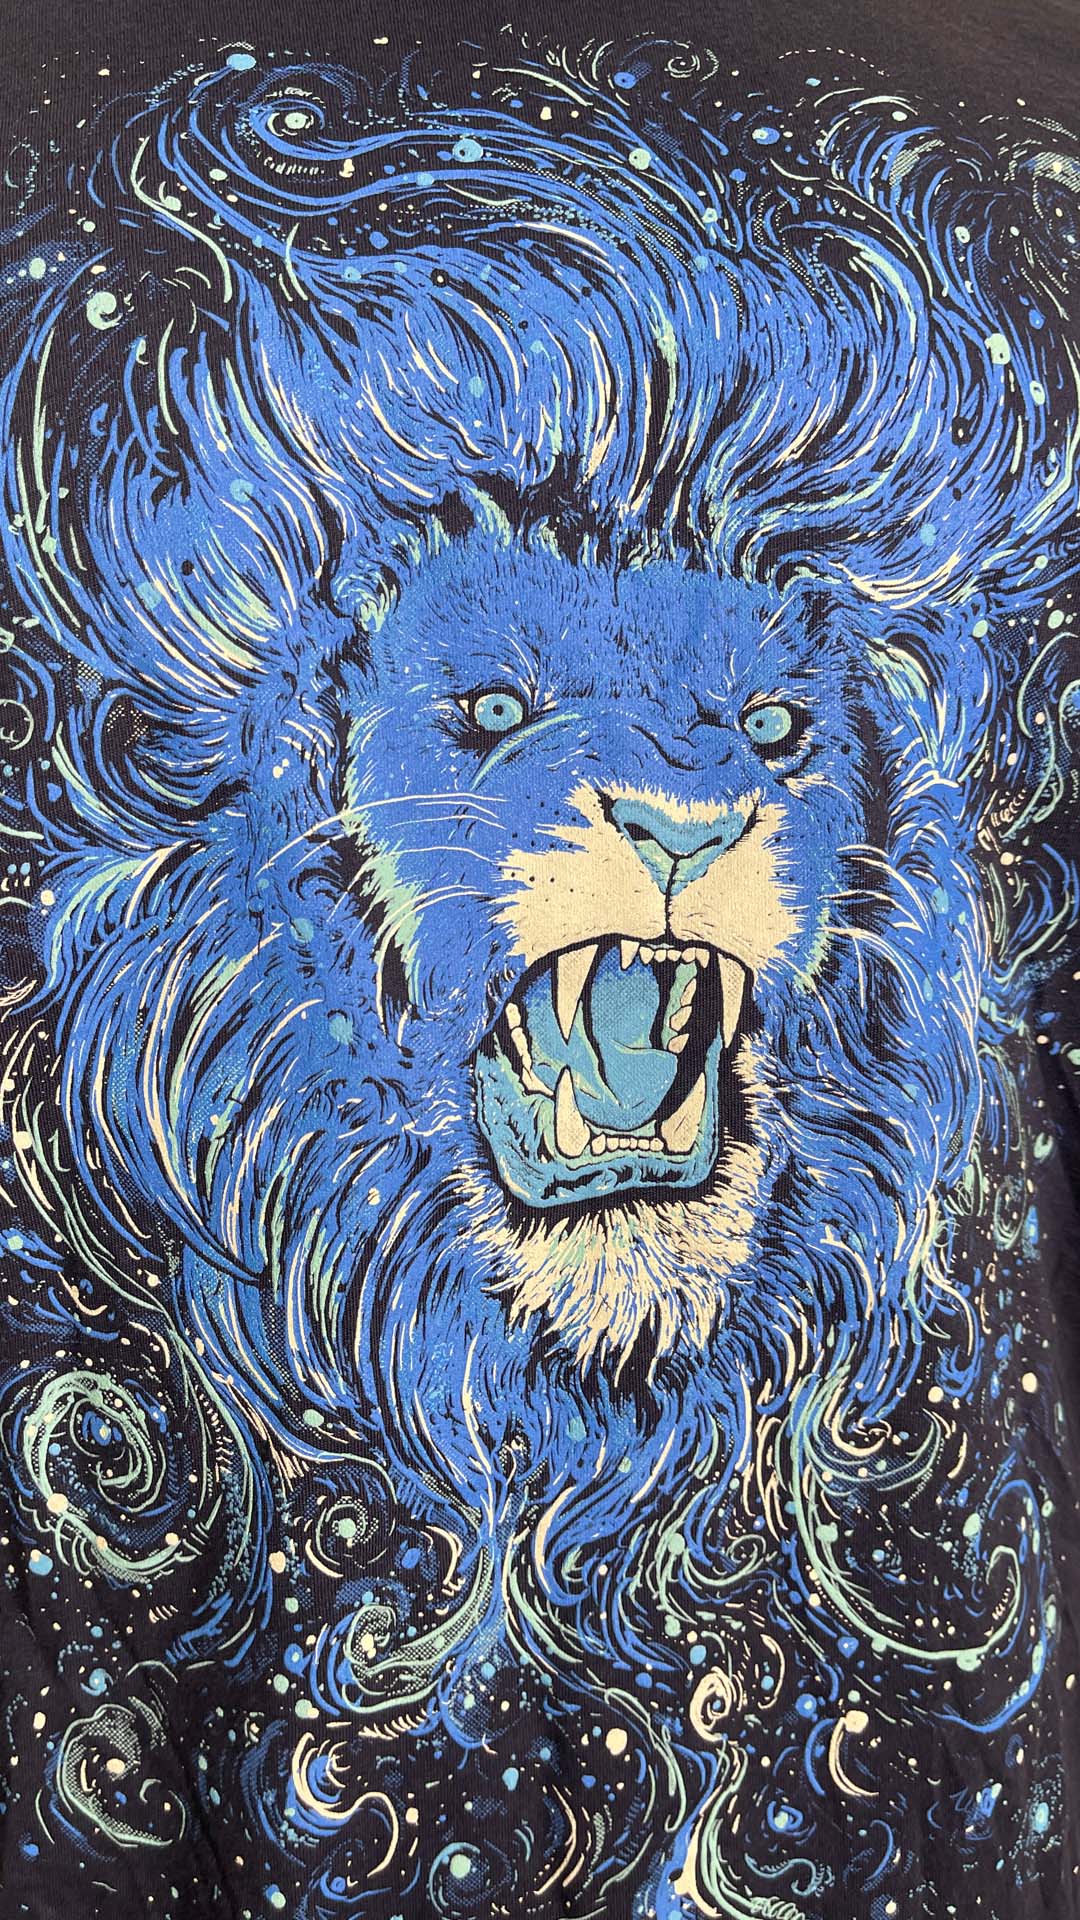 Cosmic Lion